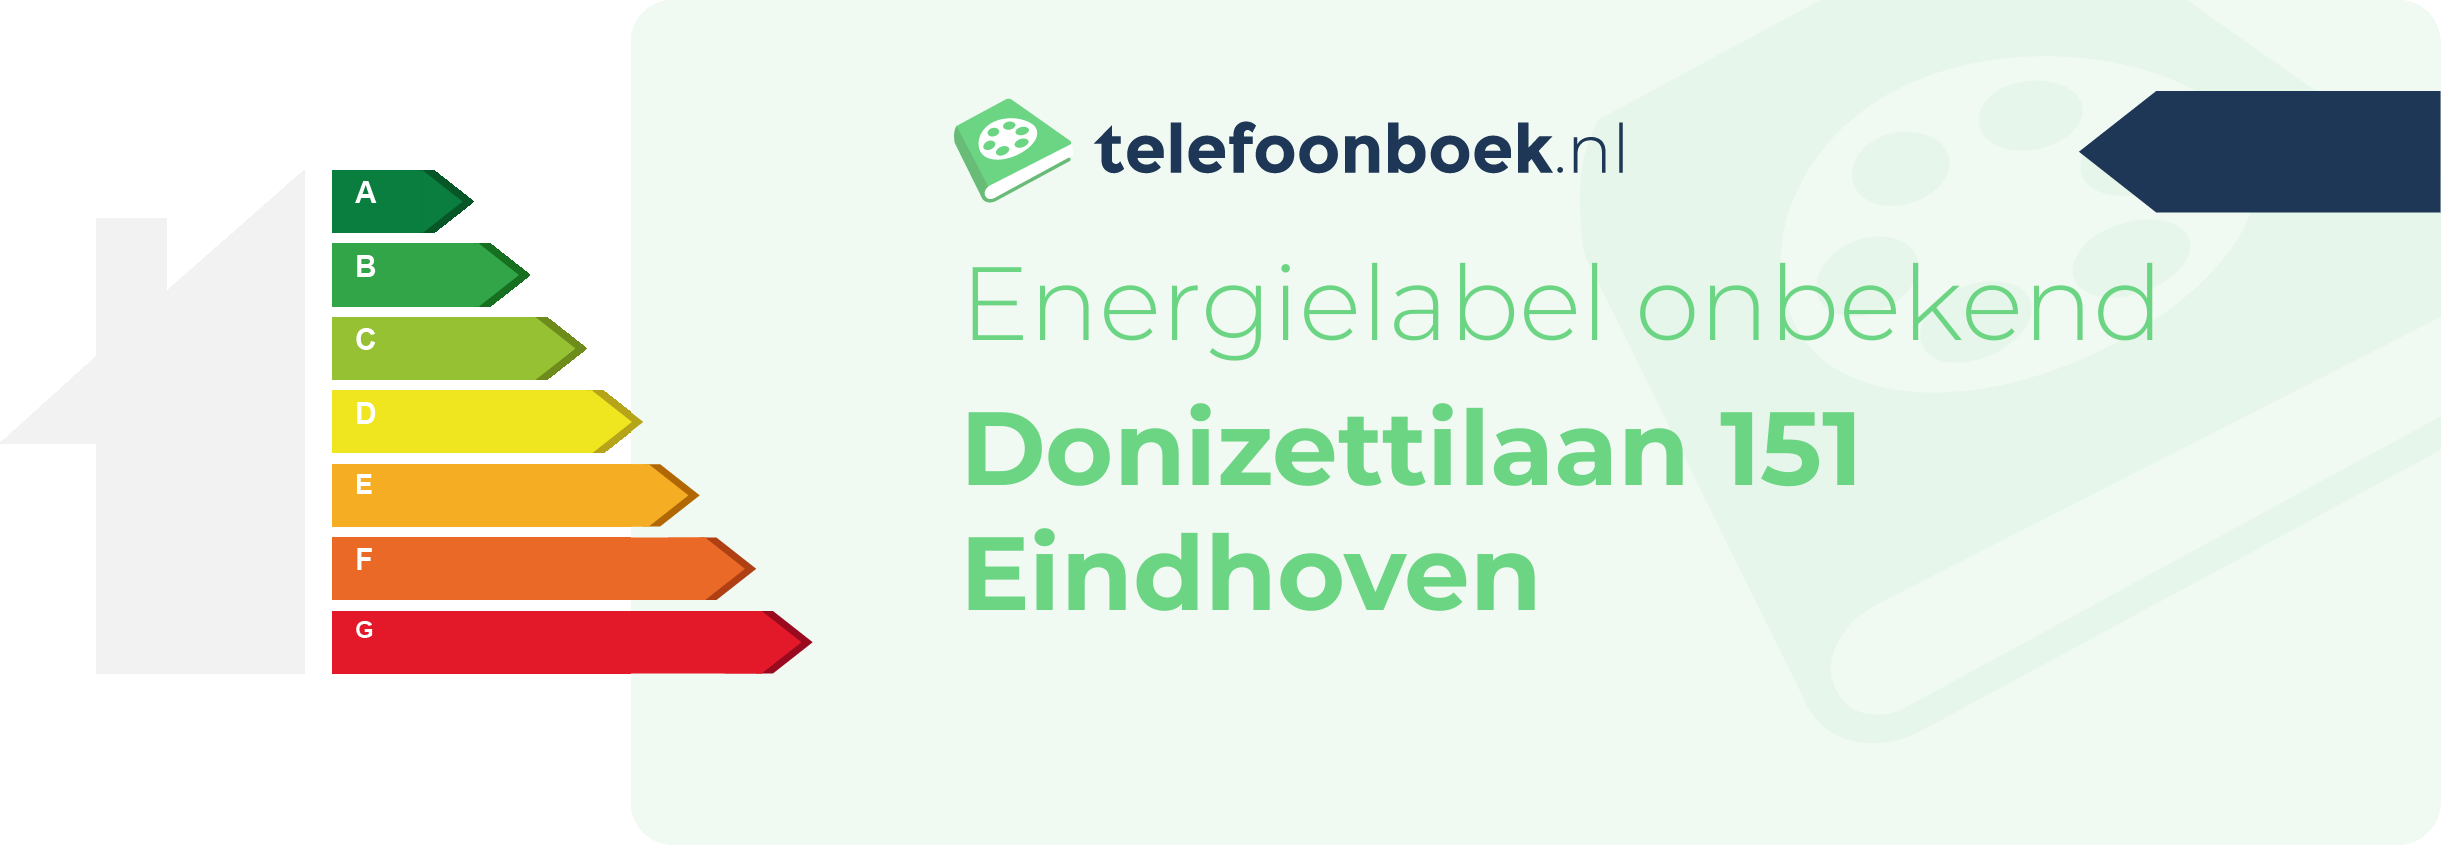 Energielabel Donizettilaan 151 Eindhoven